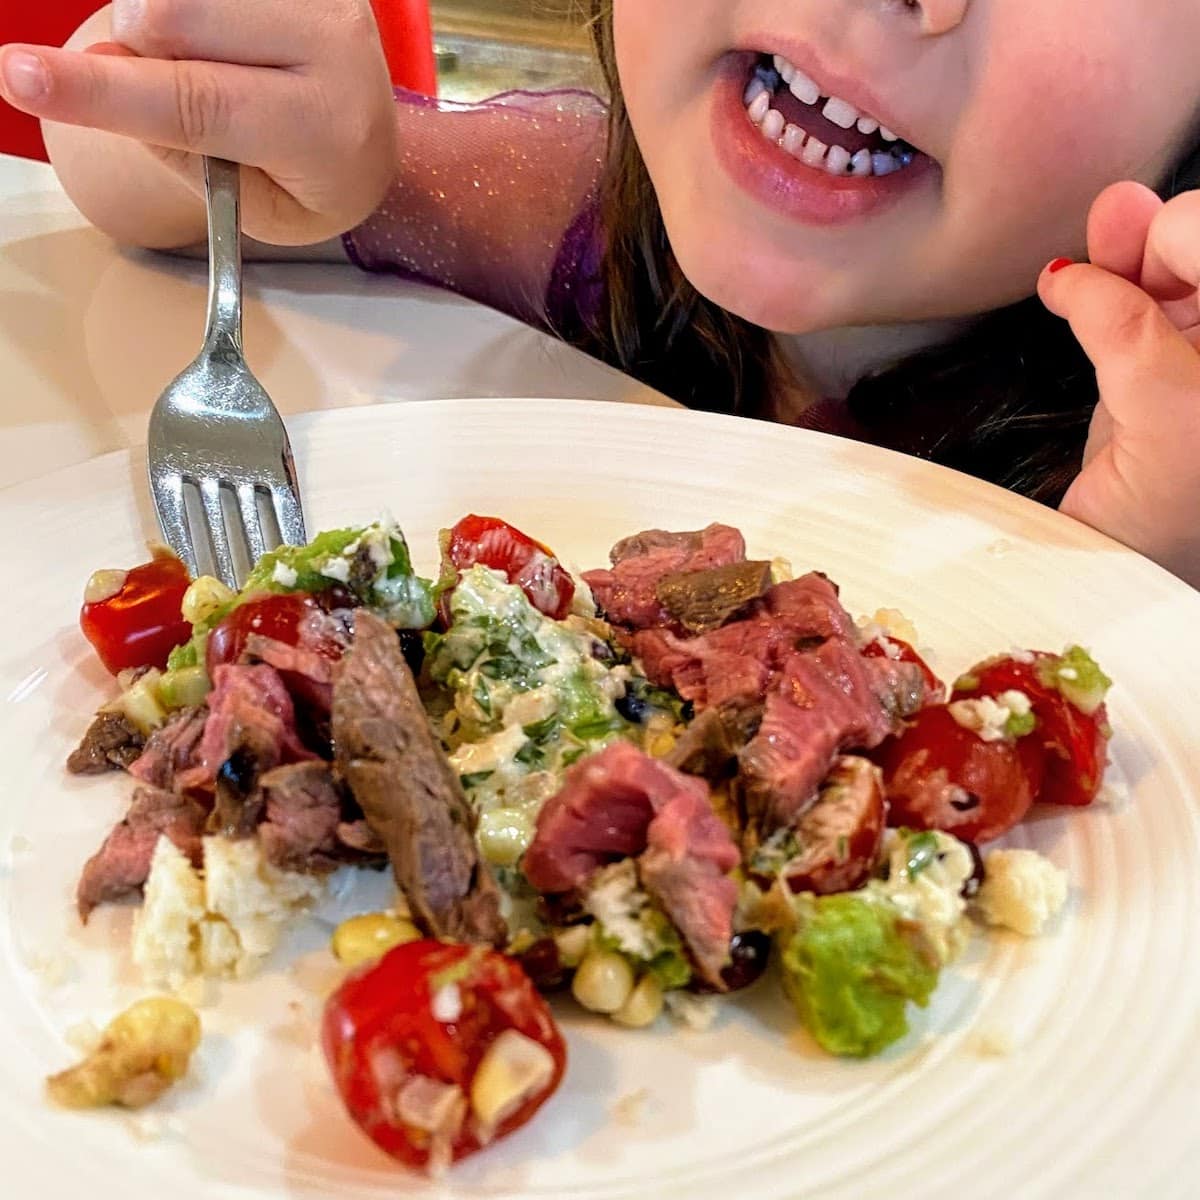 child eating steak with veggies